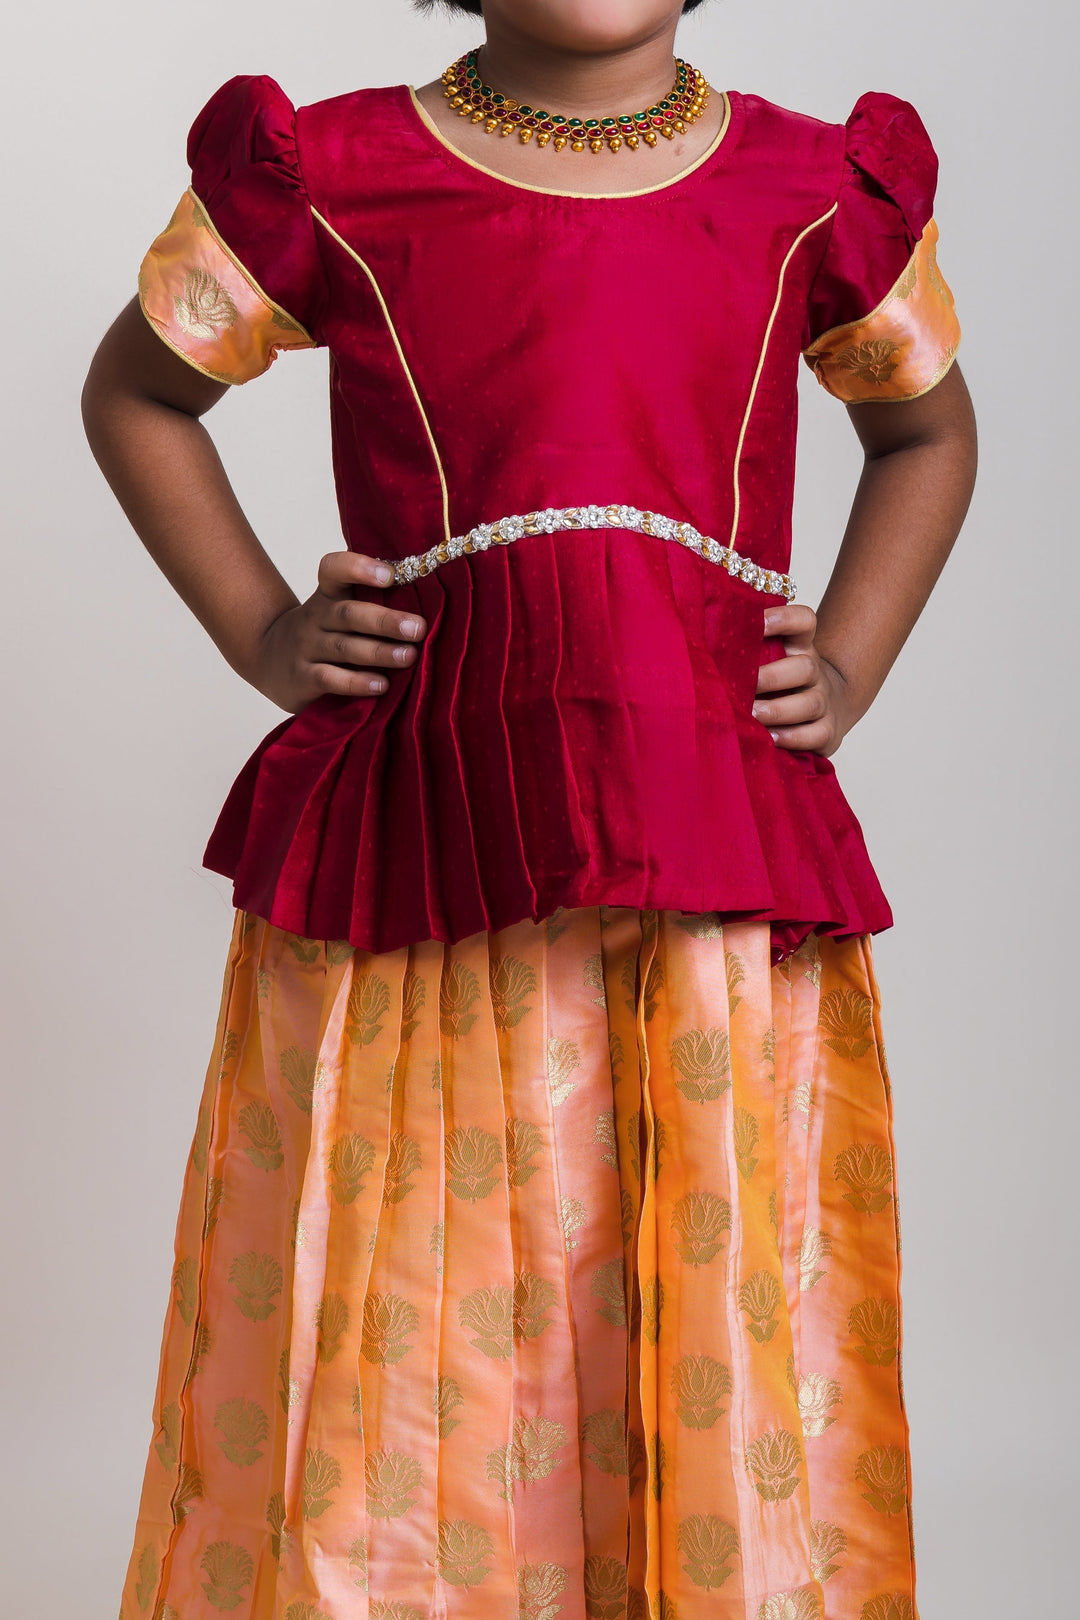 The Nesavu Pattu Pavadai Peplum Maroon Blouse And Pink Shaded Brocade Printed Silk Skirt For Girls Nesavu Maroon And Pink Pattu Pavadai| Peplum Blouse Design Patterns| The Nesavu